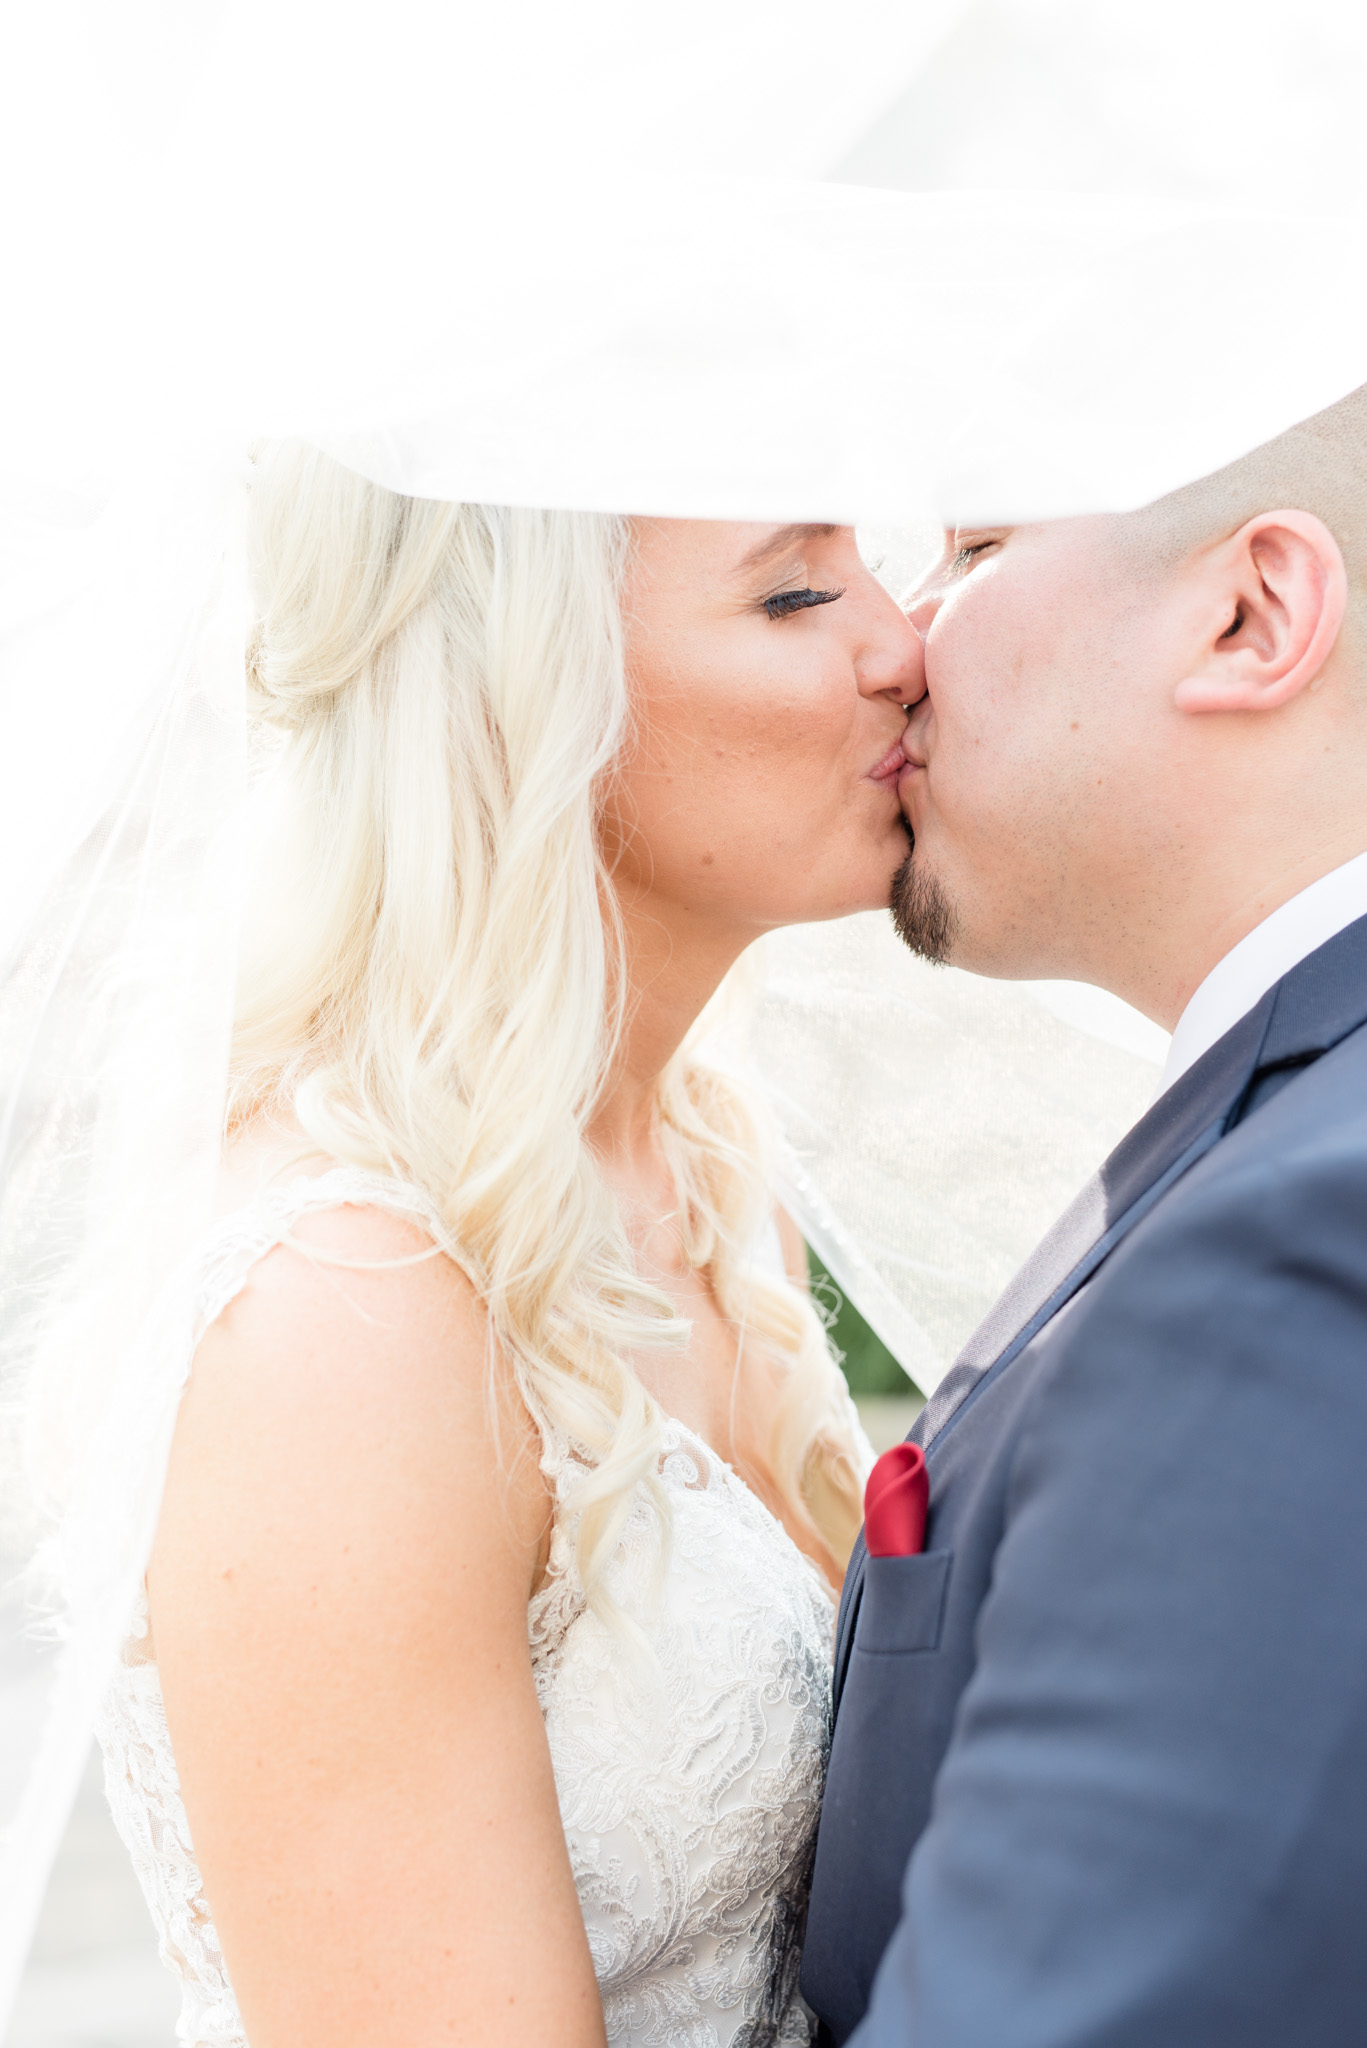 Bride and groom kiss under veil. 